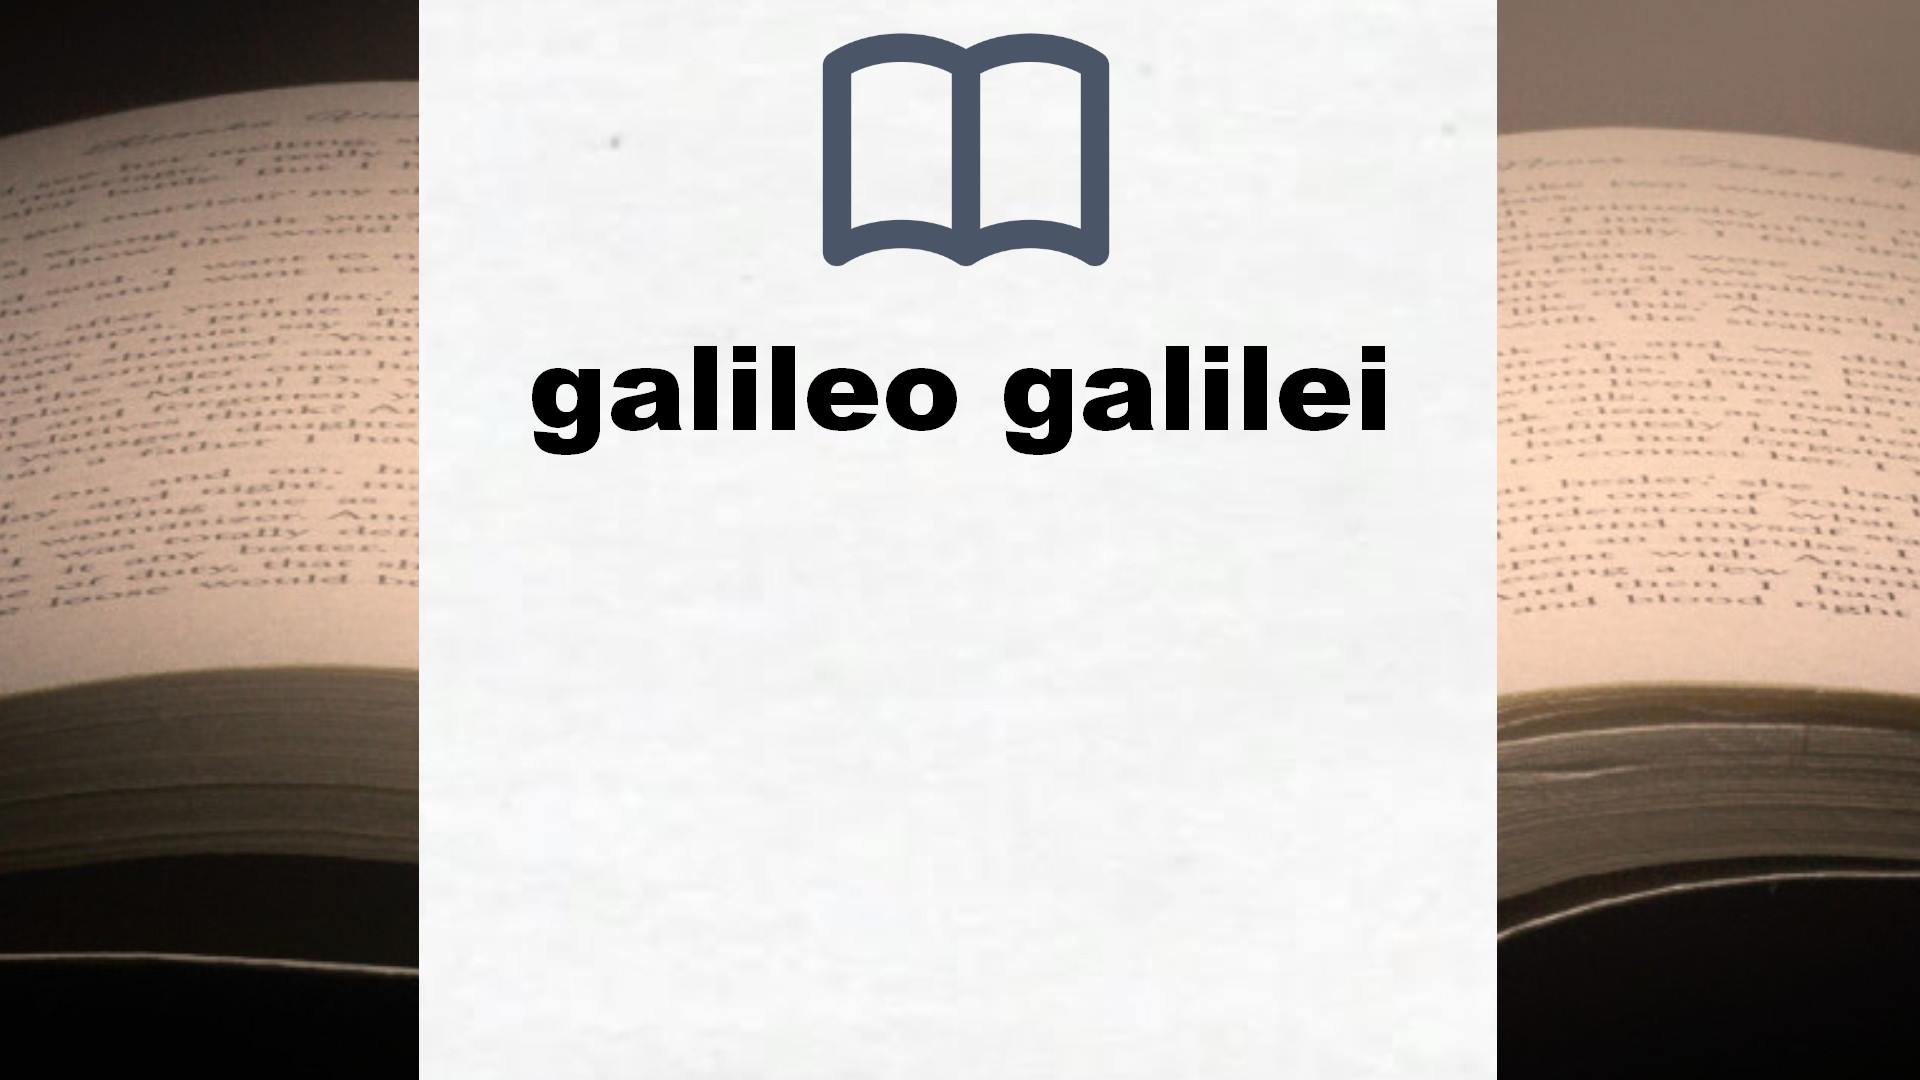 Libros sobre galileo galilei